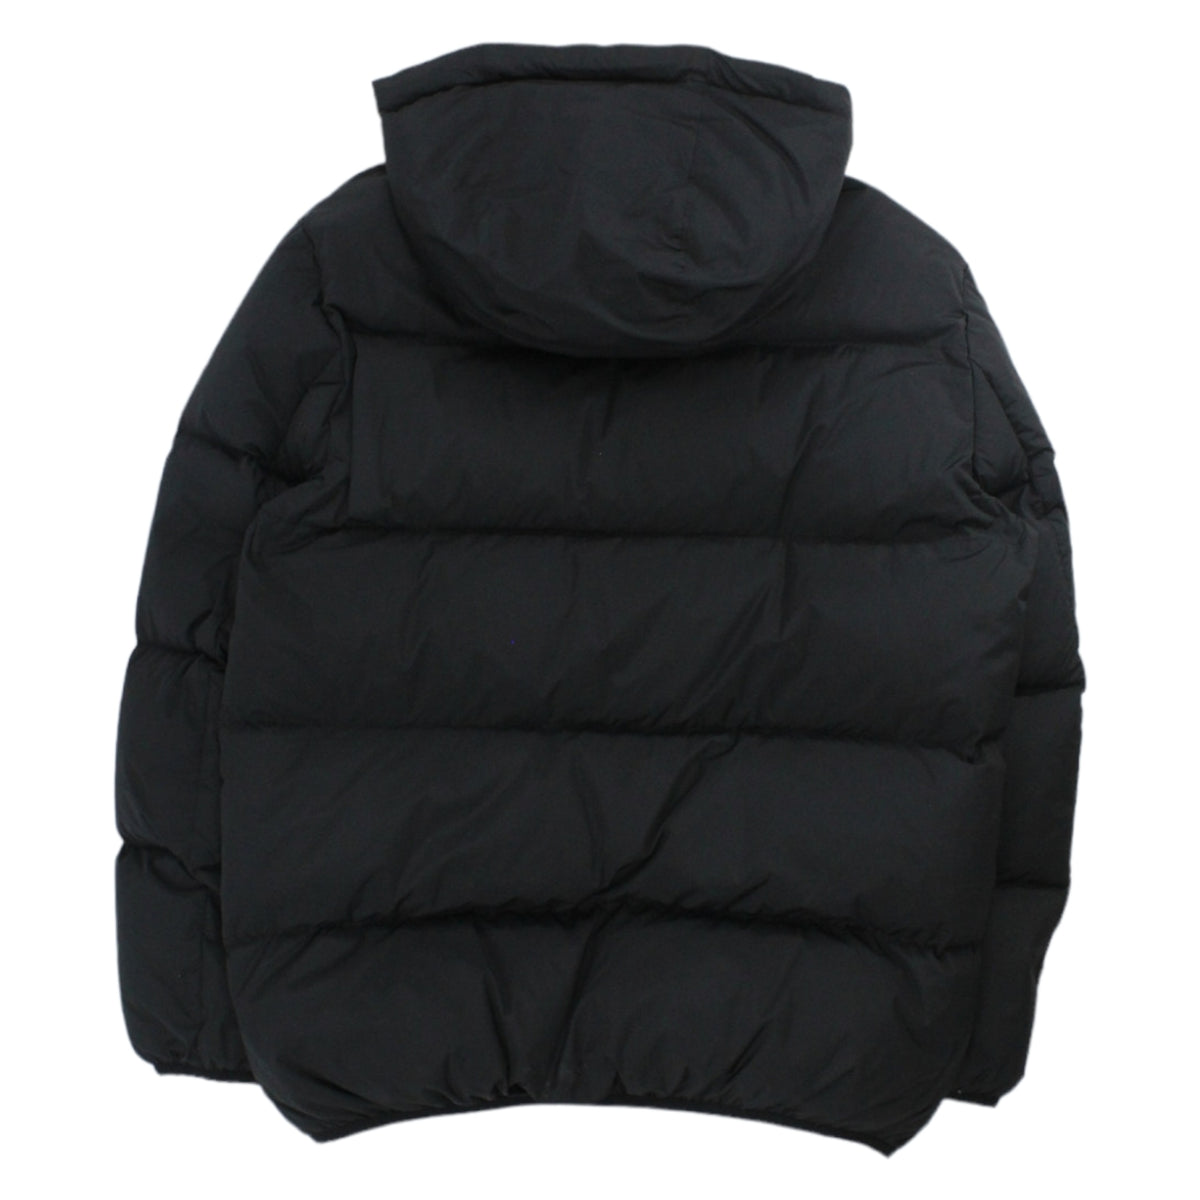 Arket Black Hooded Puffer Jacket